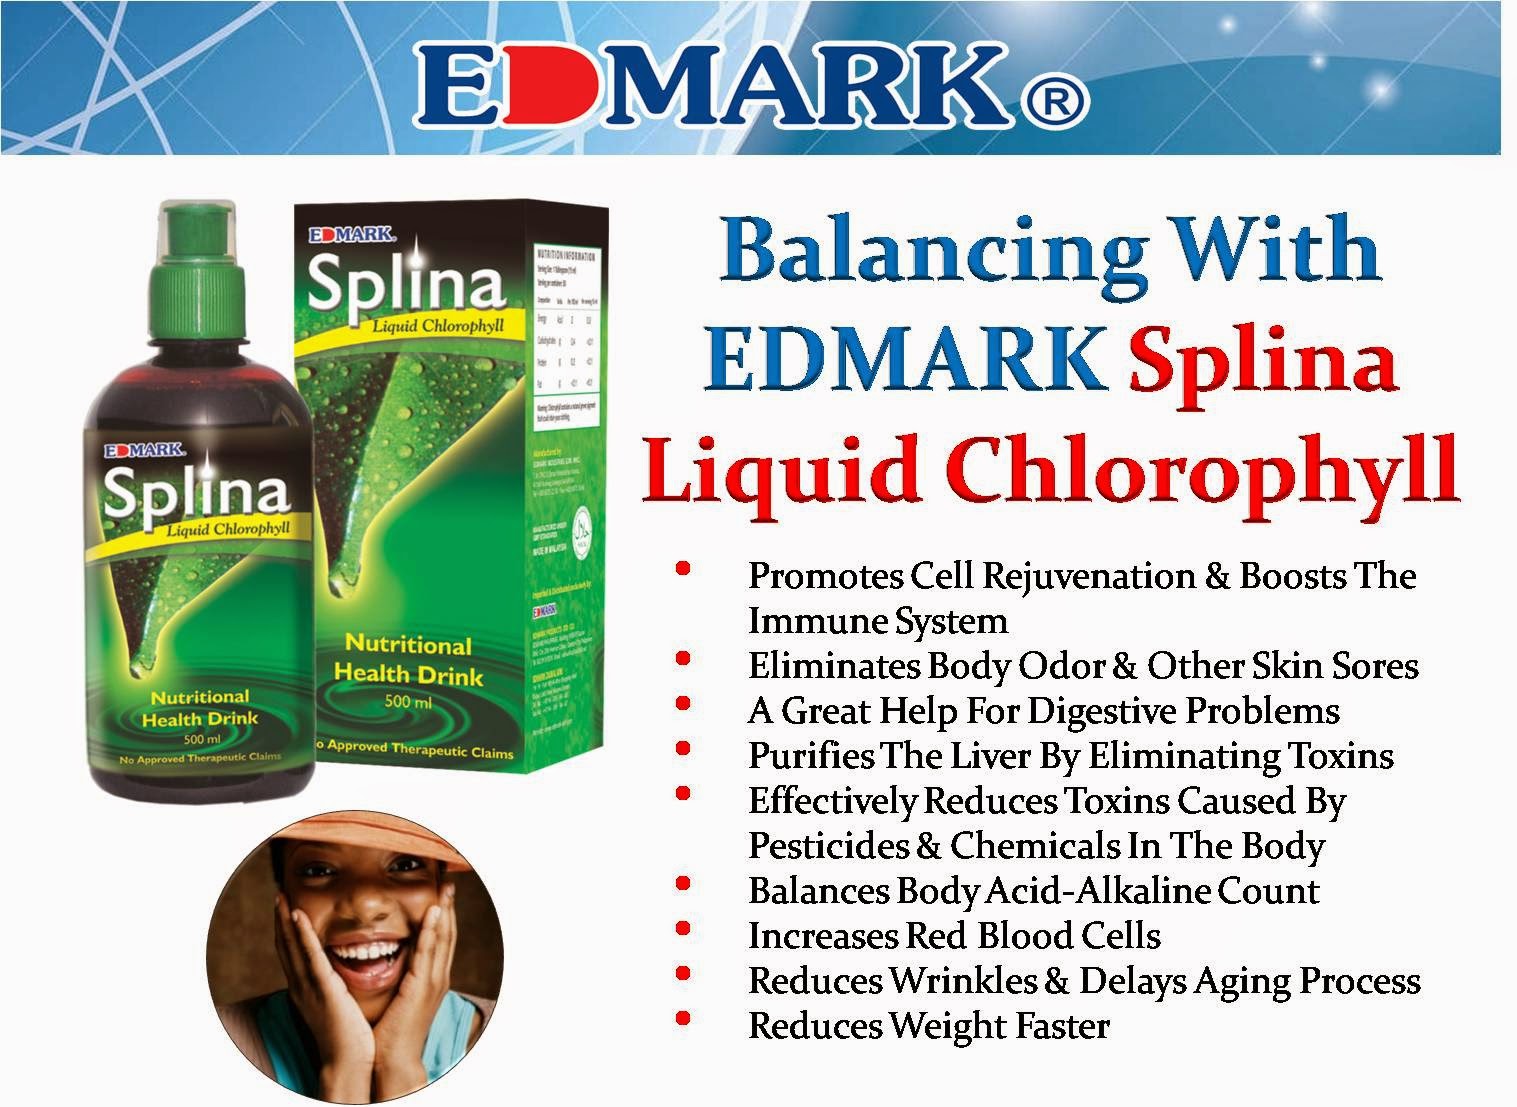  edmark splina liquid chlorophyll drink benefits